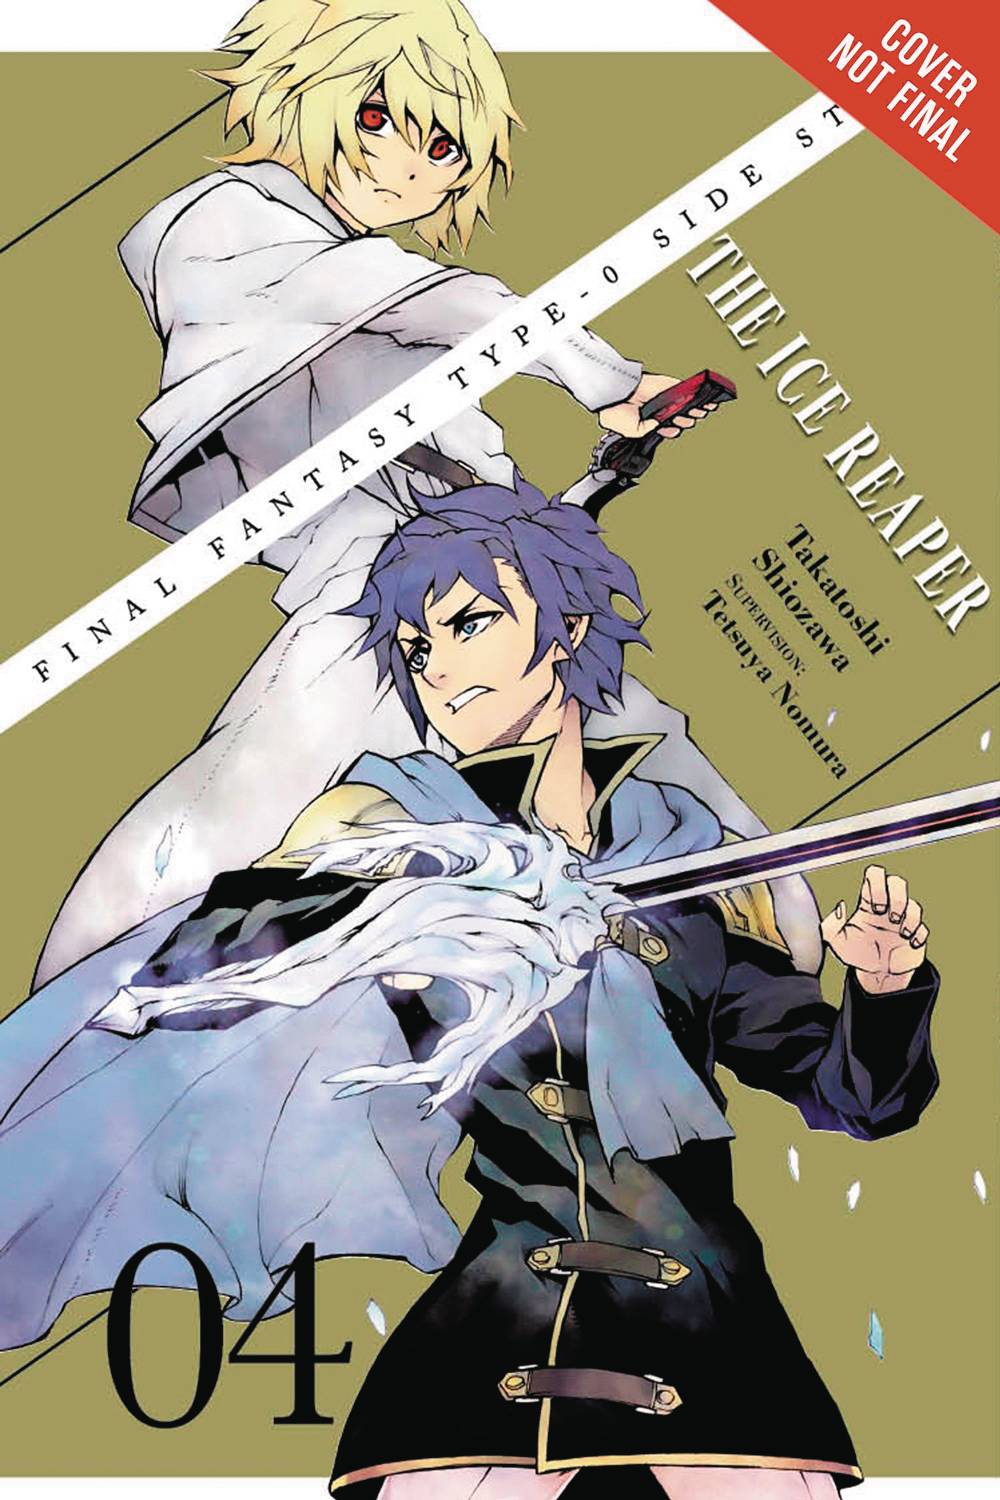 Final Fantasy Type 0 Side Story Manga Volume 4 Ice Reaper